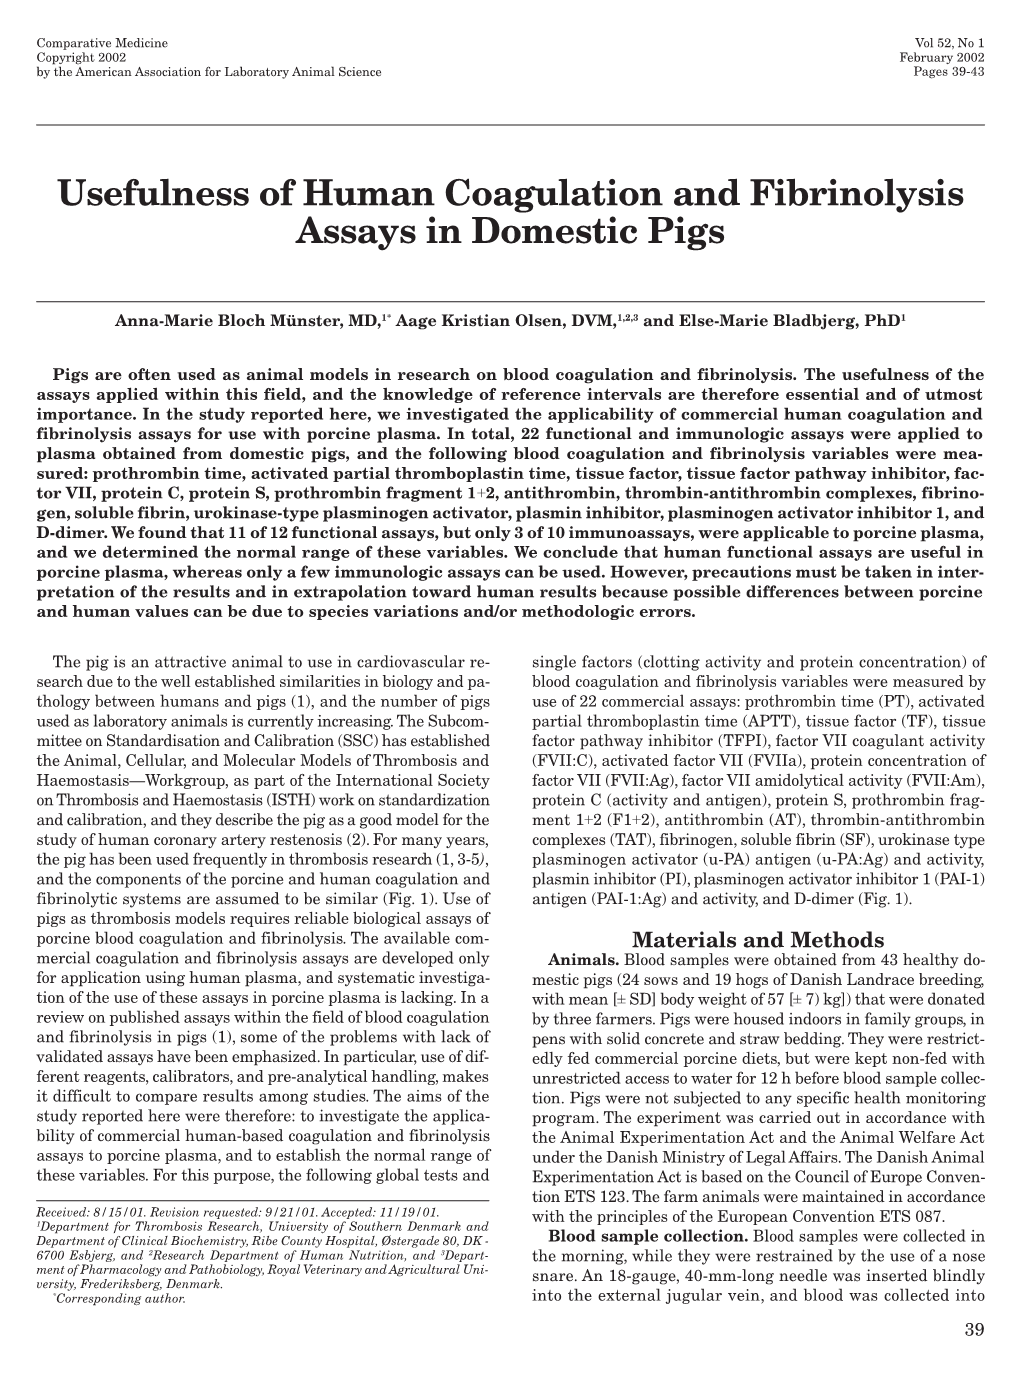 Usefulness of Human Coagulation and Fibrinolysis Assays in Domestic Pigs